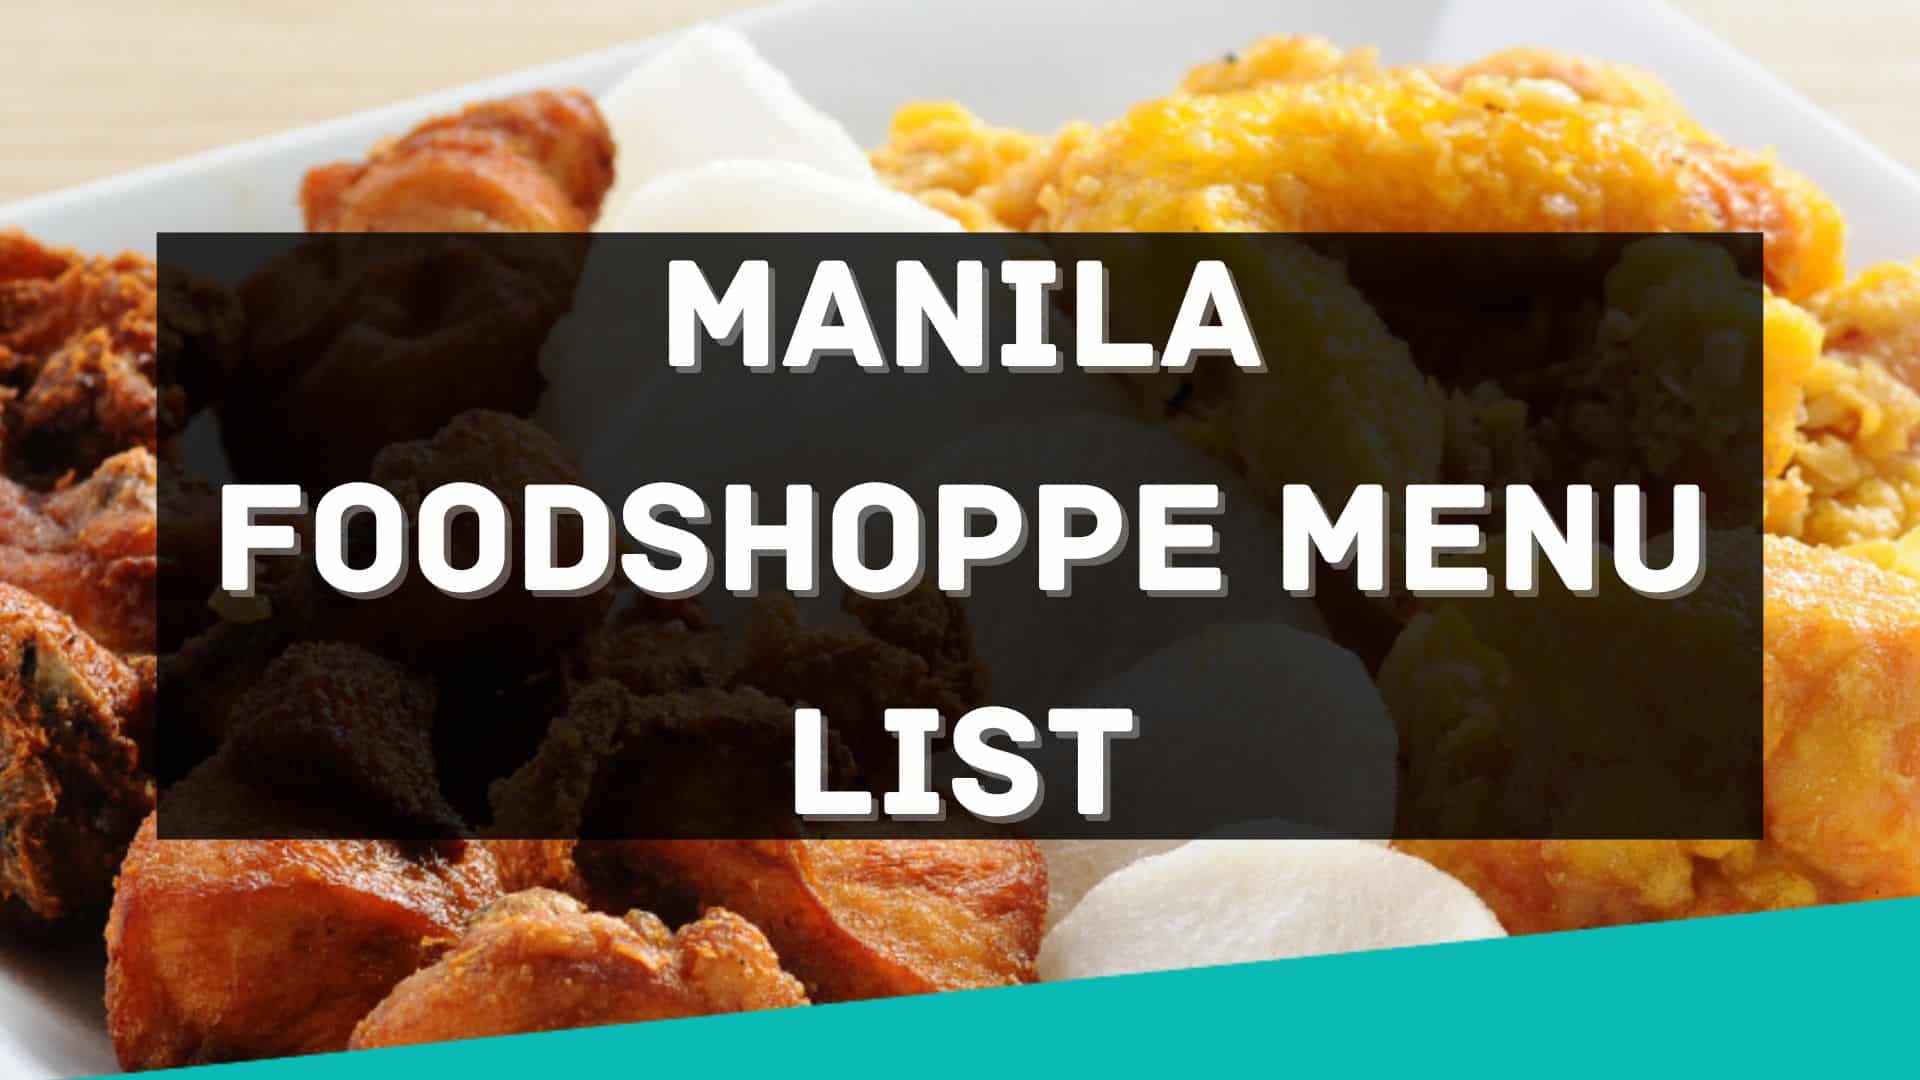 manila foodshoppe menu prices philippines